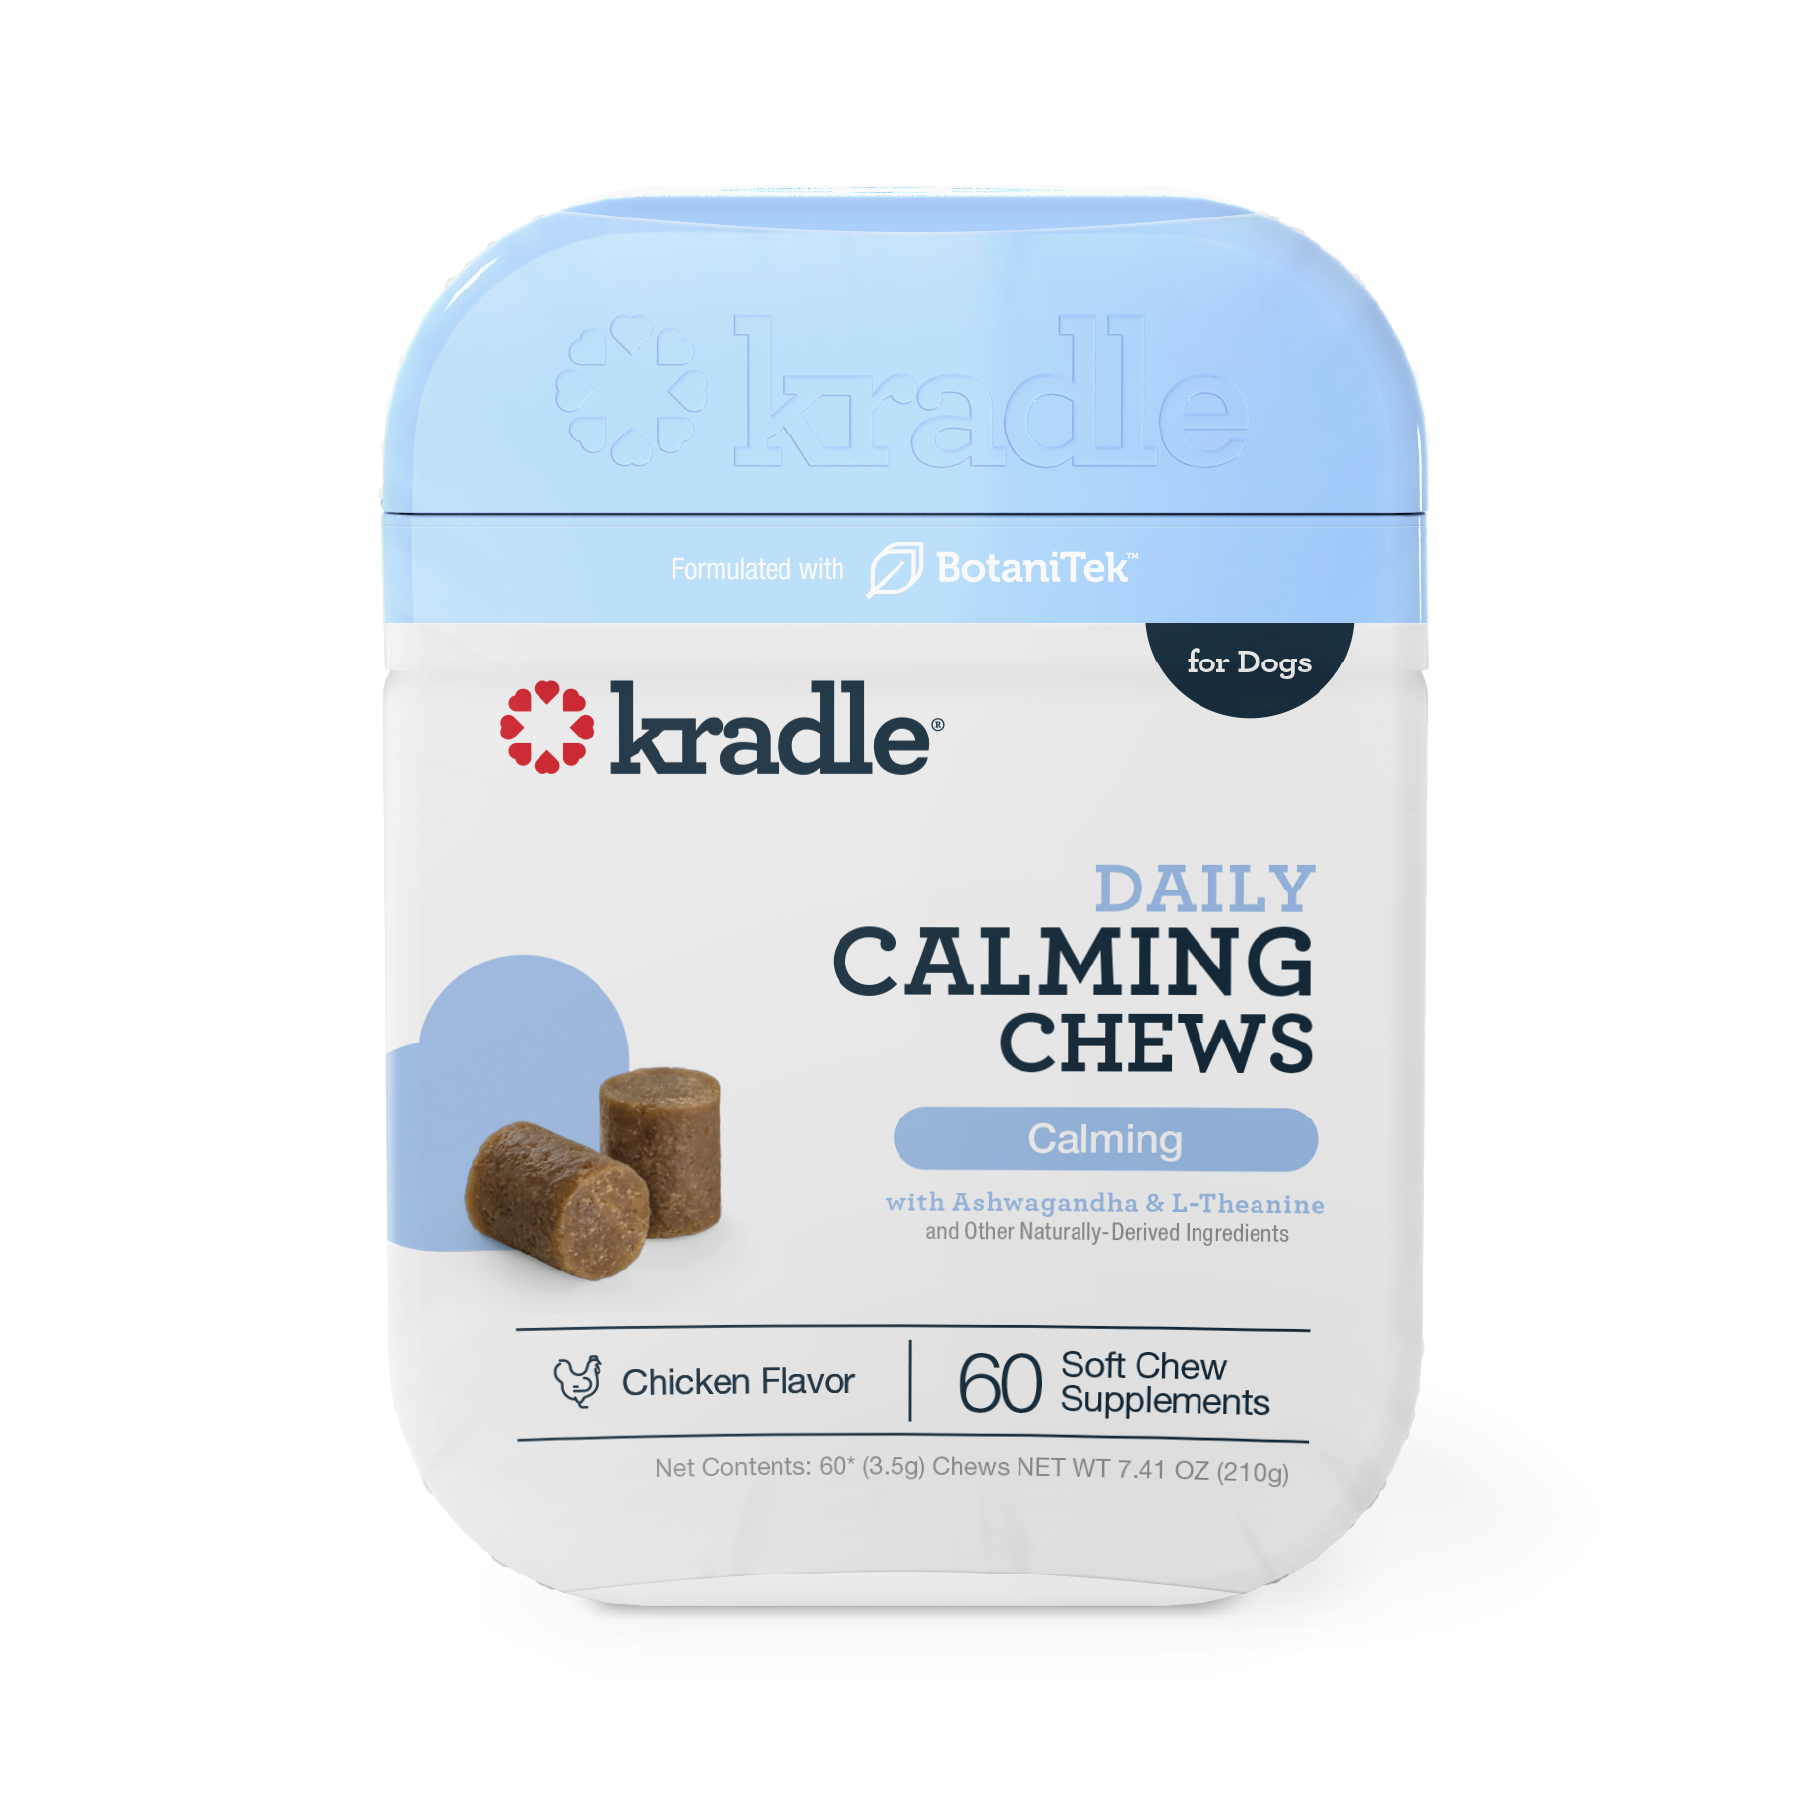 Daily Calming Chews